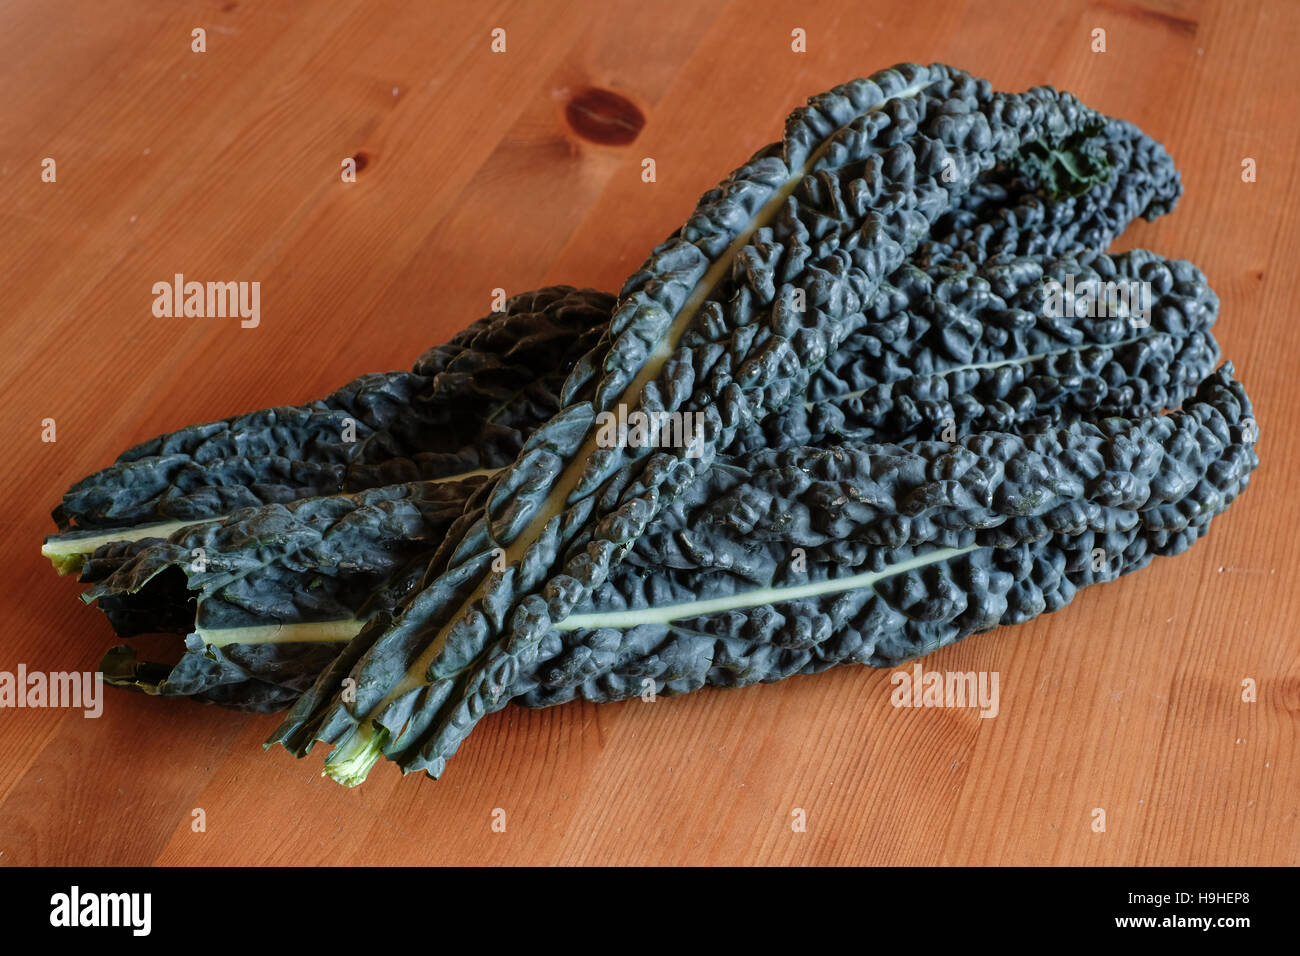 Black Kale Stock Photo